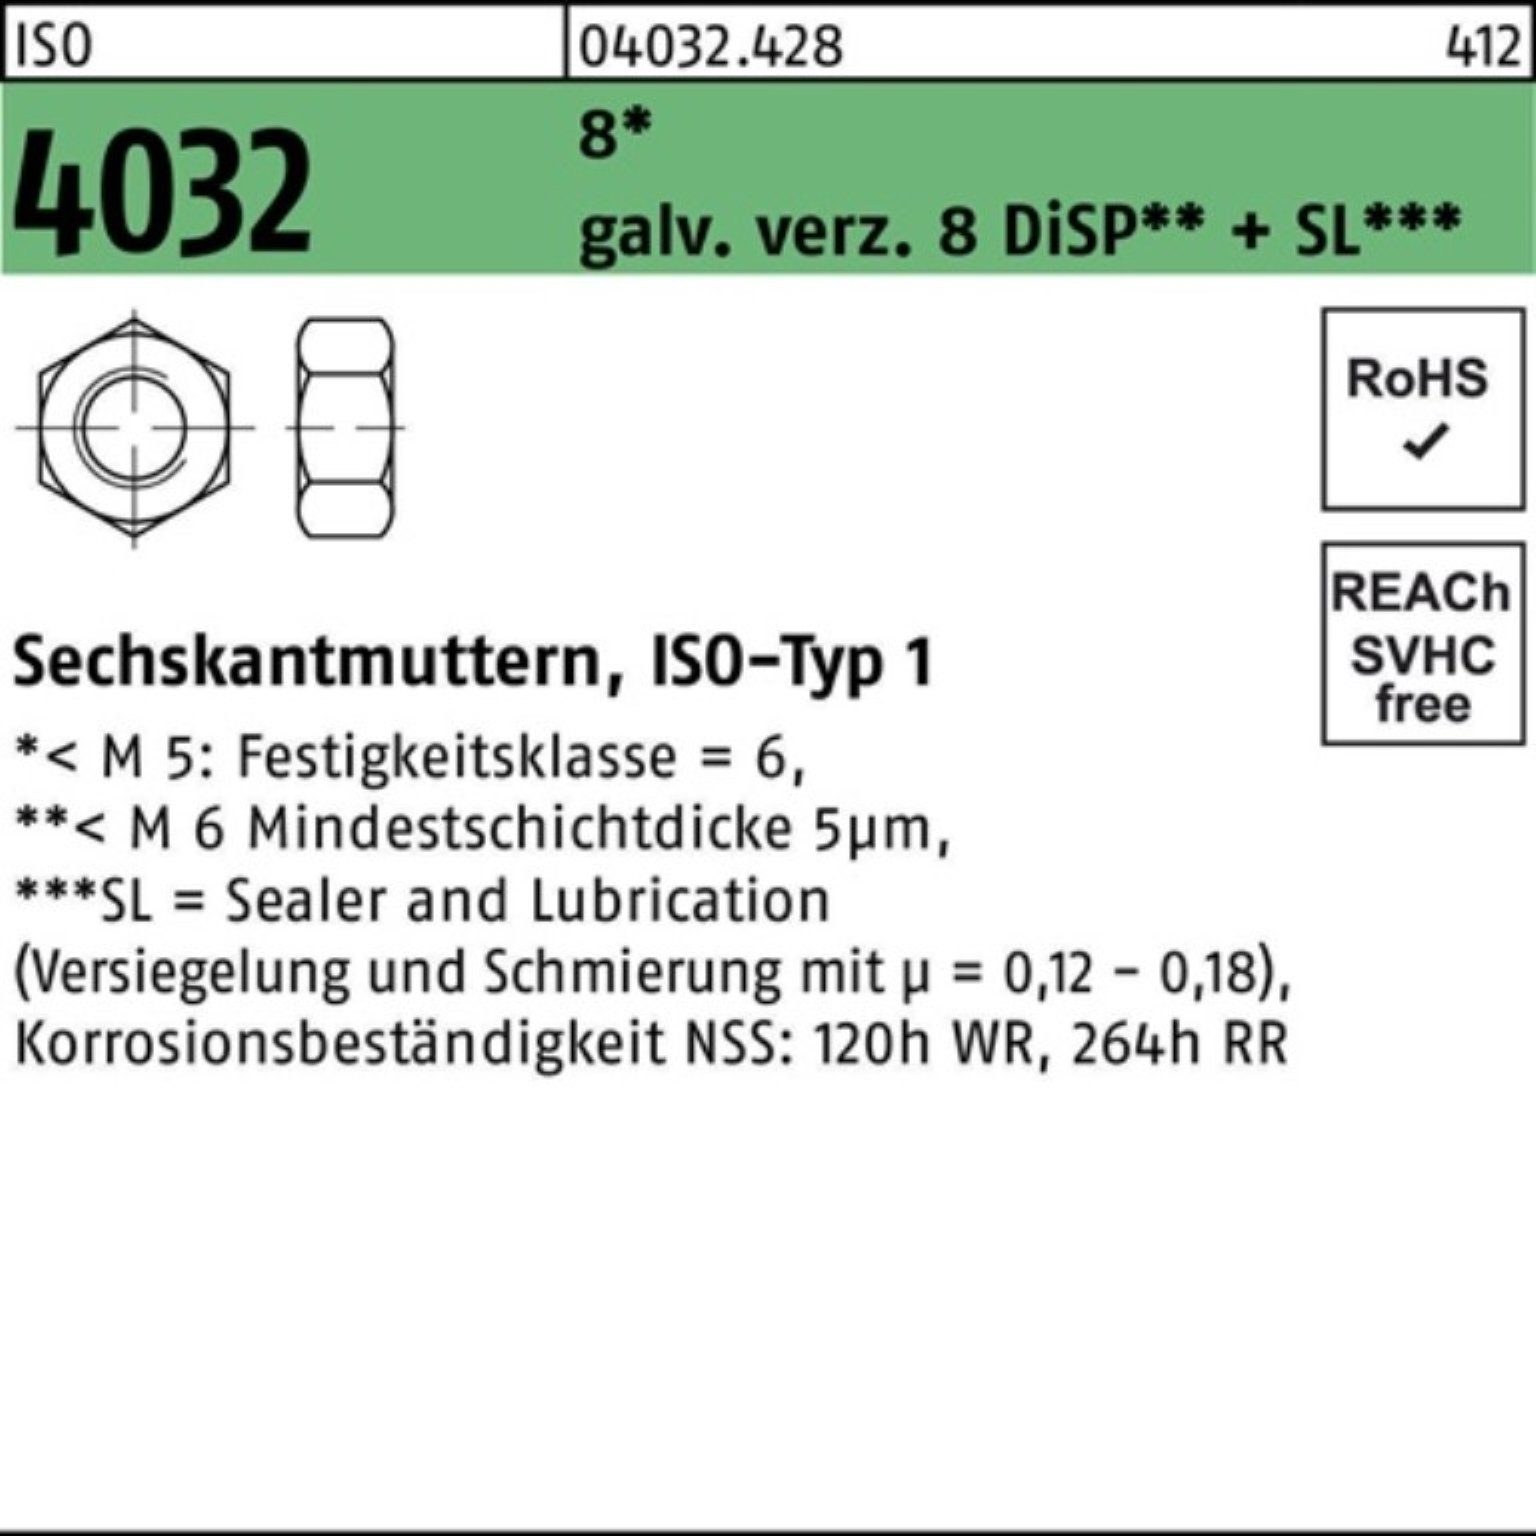 Muttern + ISO Pack DiSP 8 galv.verz. 1000er Bufab 4032 Sechskantmutter 1000 8 SL M4